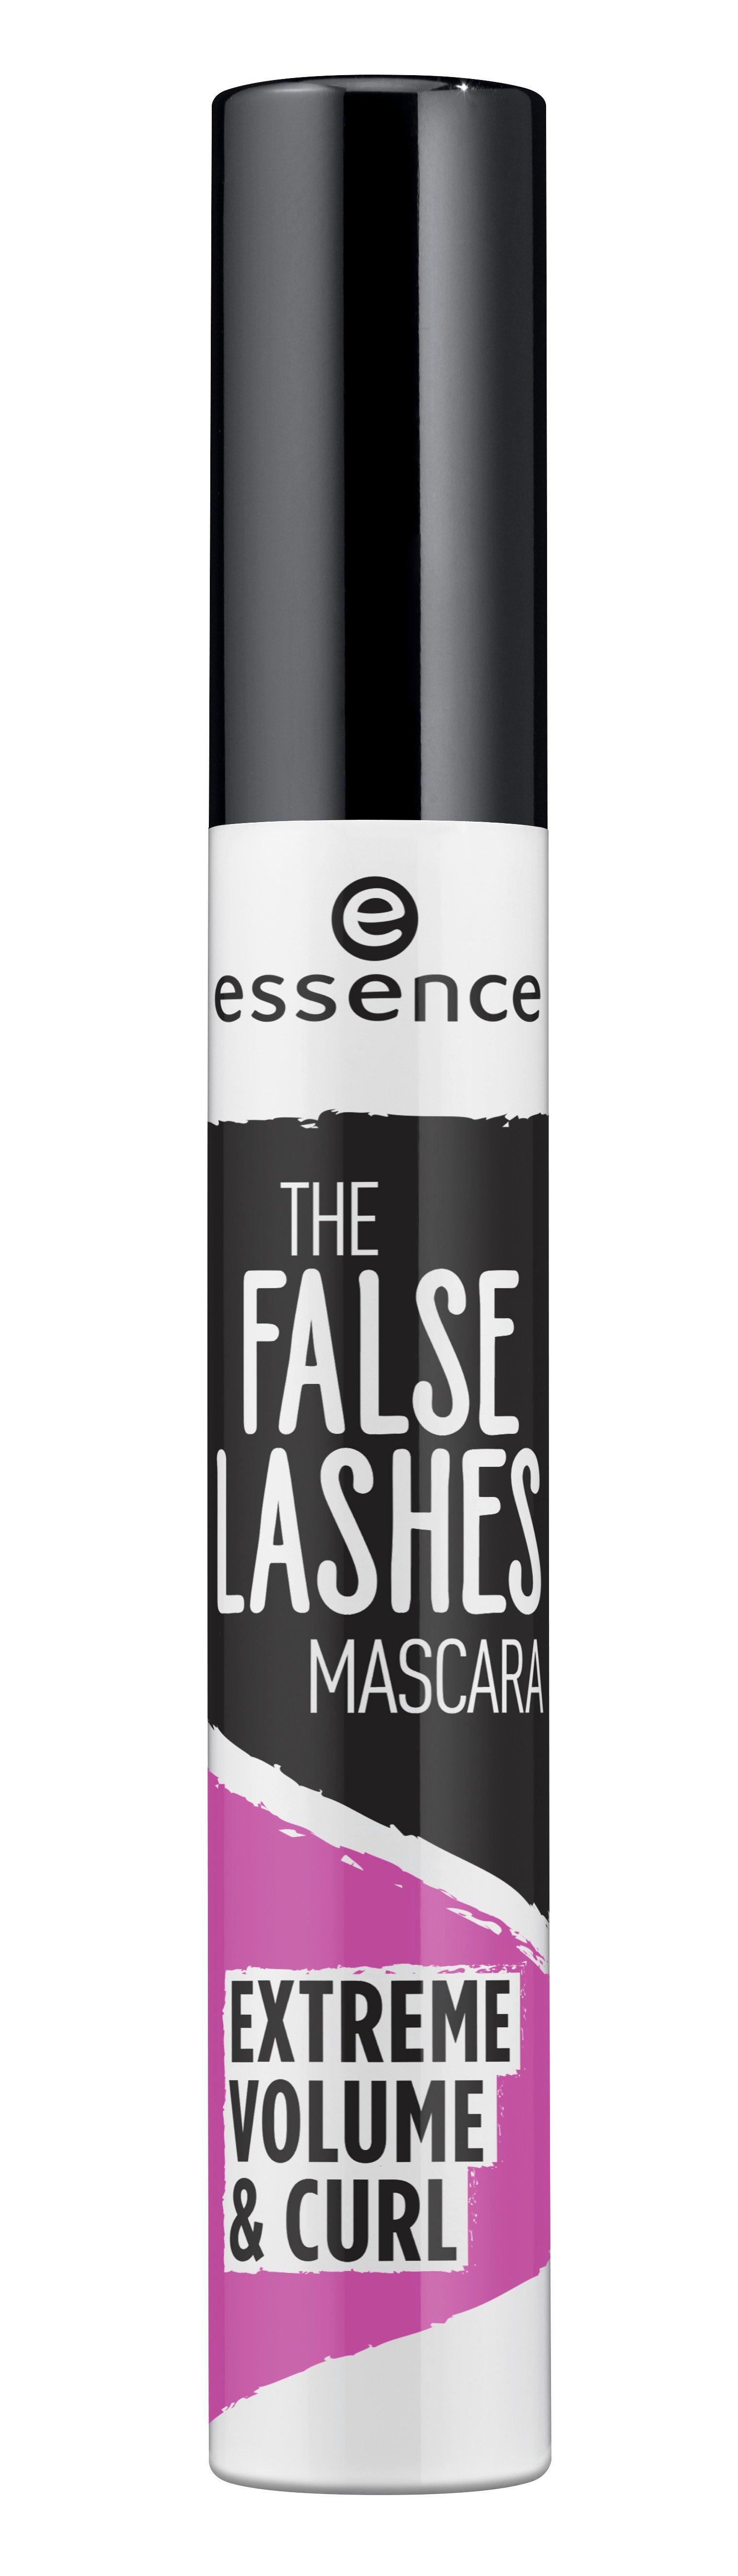 essence  The False Lashes Mascara, Extreme Volume&Curl 